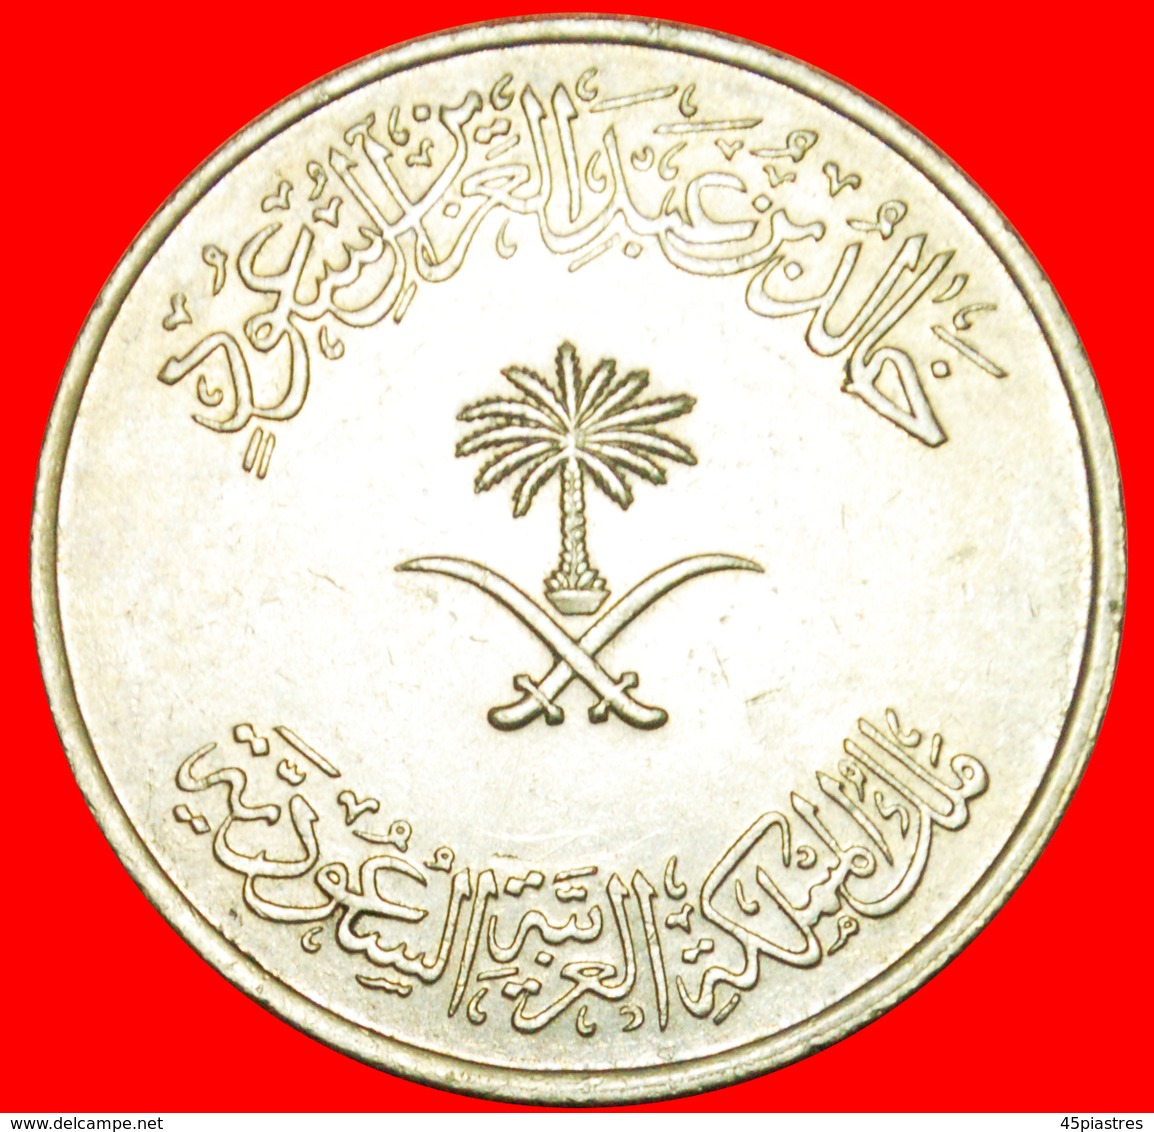 # DAGGERS AND PALMTREE: SAUDI ARABIA ★ 100 HALALA / 1 RIYAL 1400 (1980)! LOW START ★ NO RESERVE! - Saudi Arabia